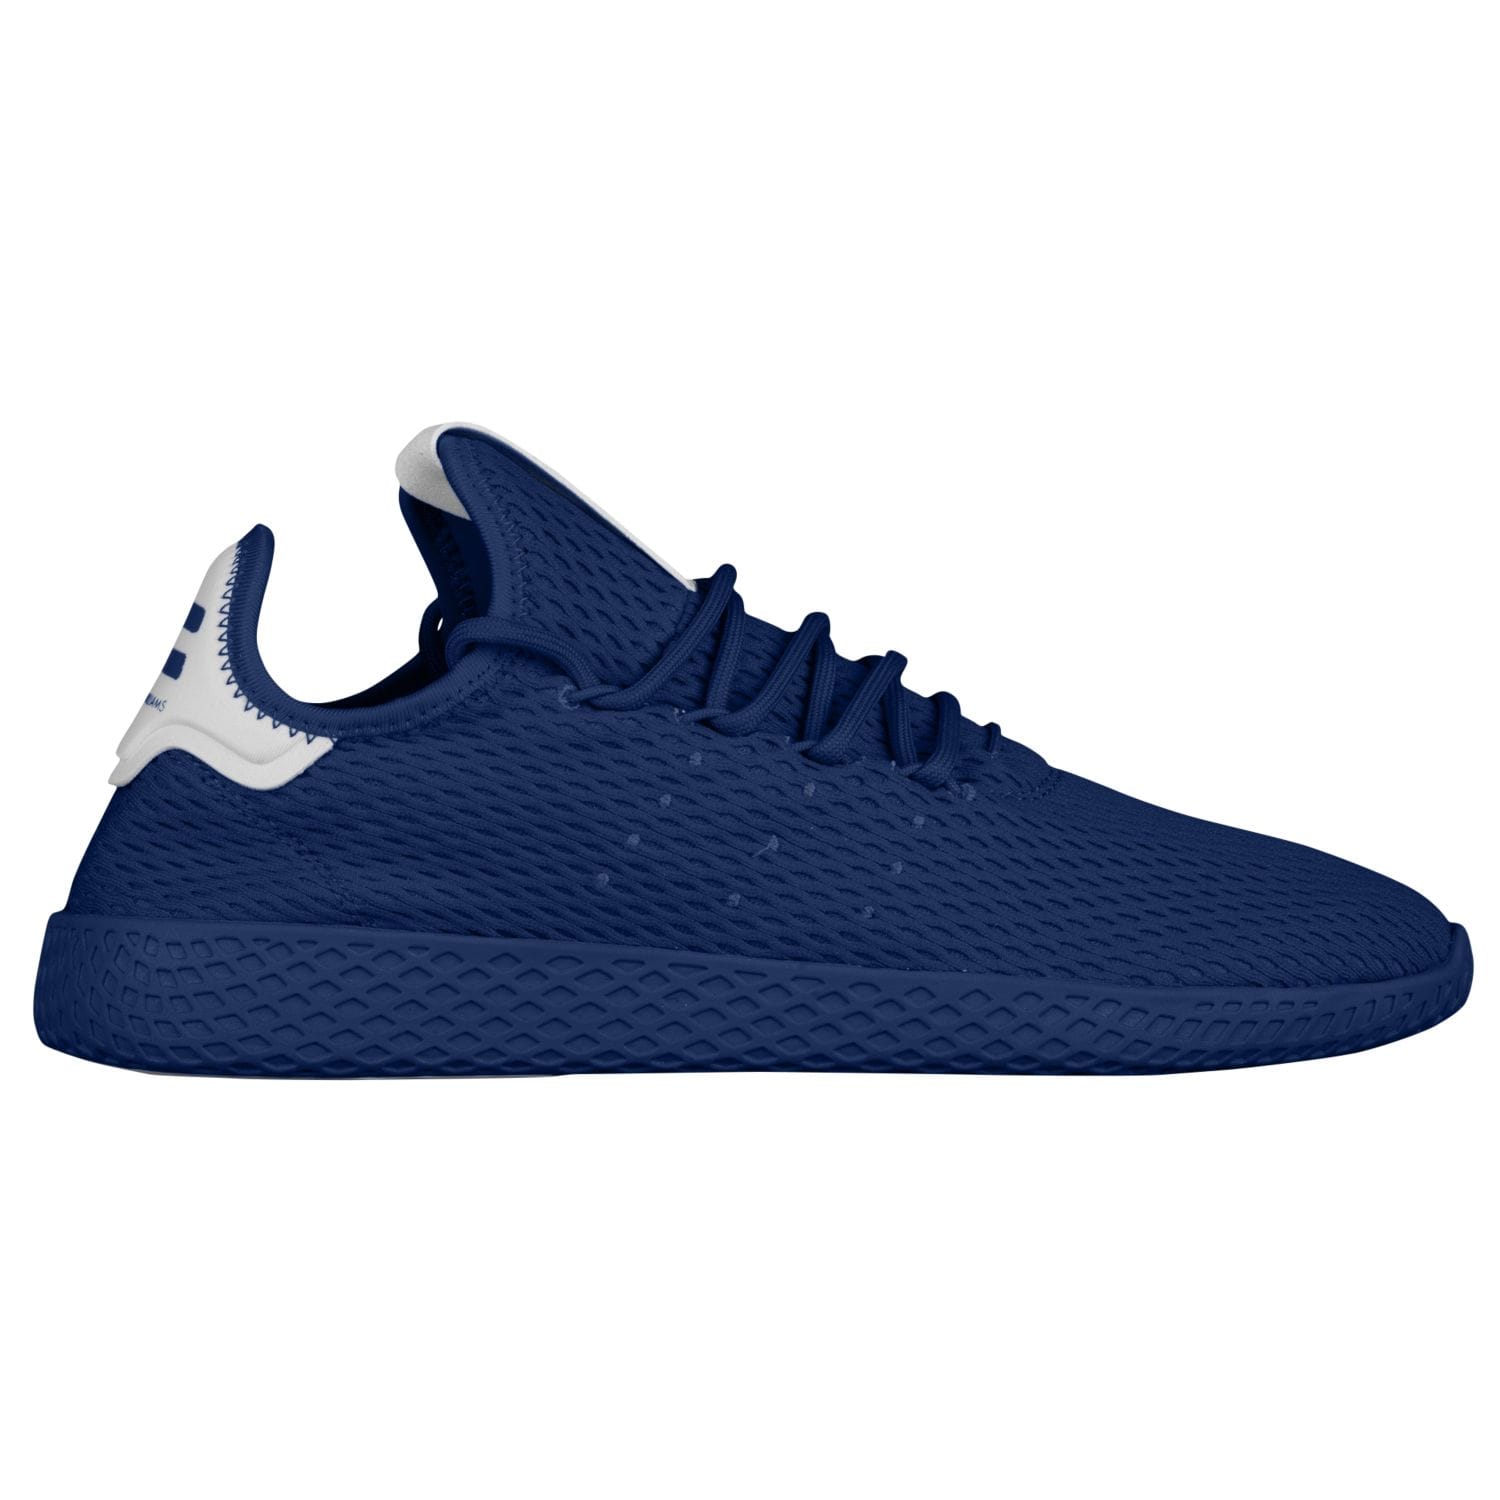 adidas Originals PW Tennis HU - Men's - Casual - Shoes - Dark Blue ...